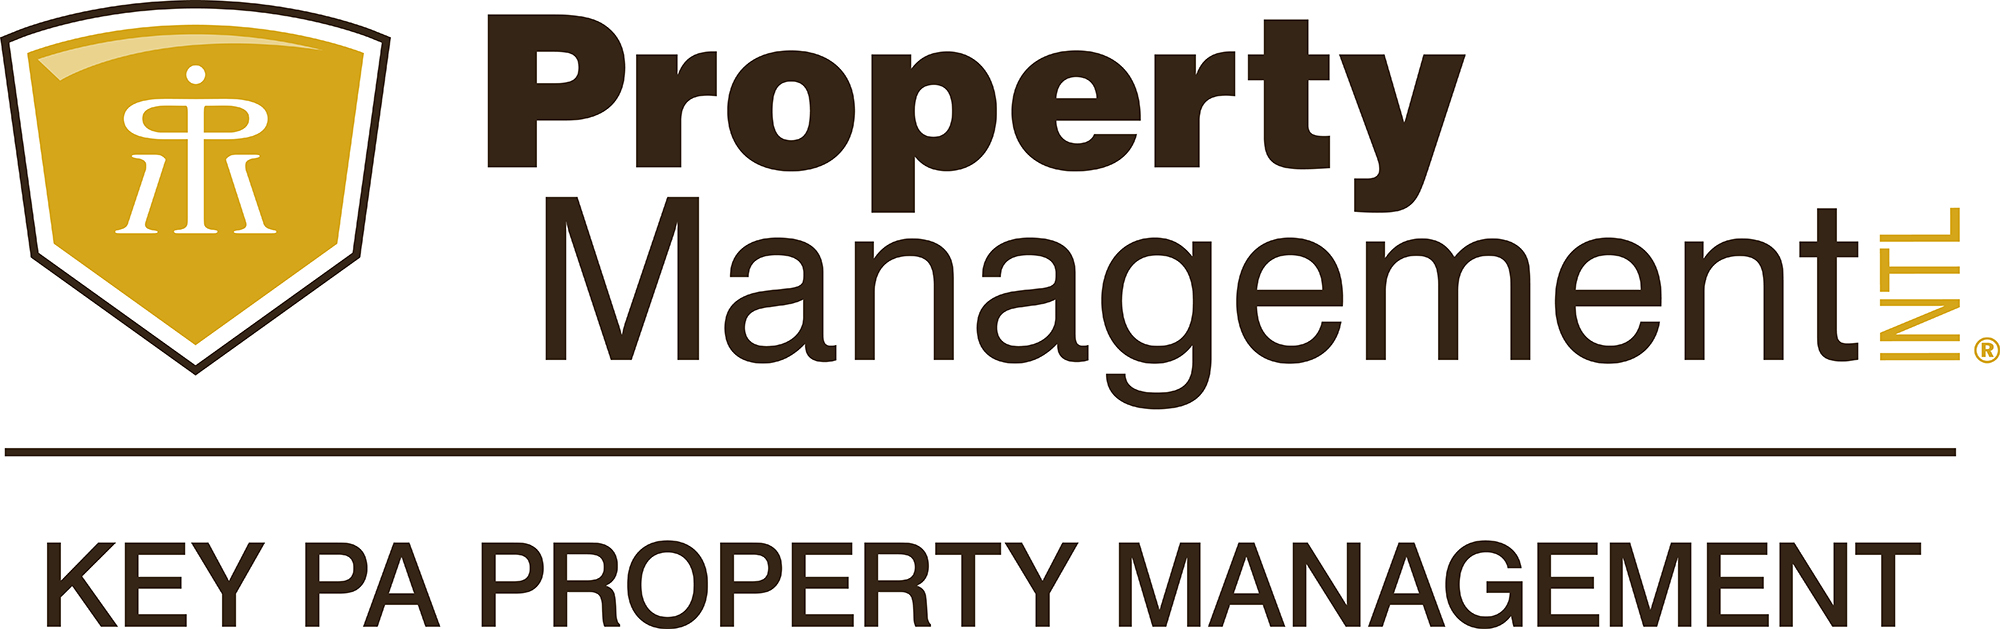 Key PA Property Management logo